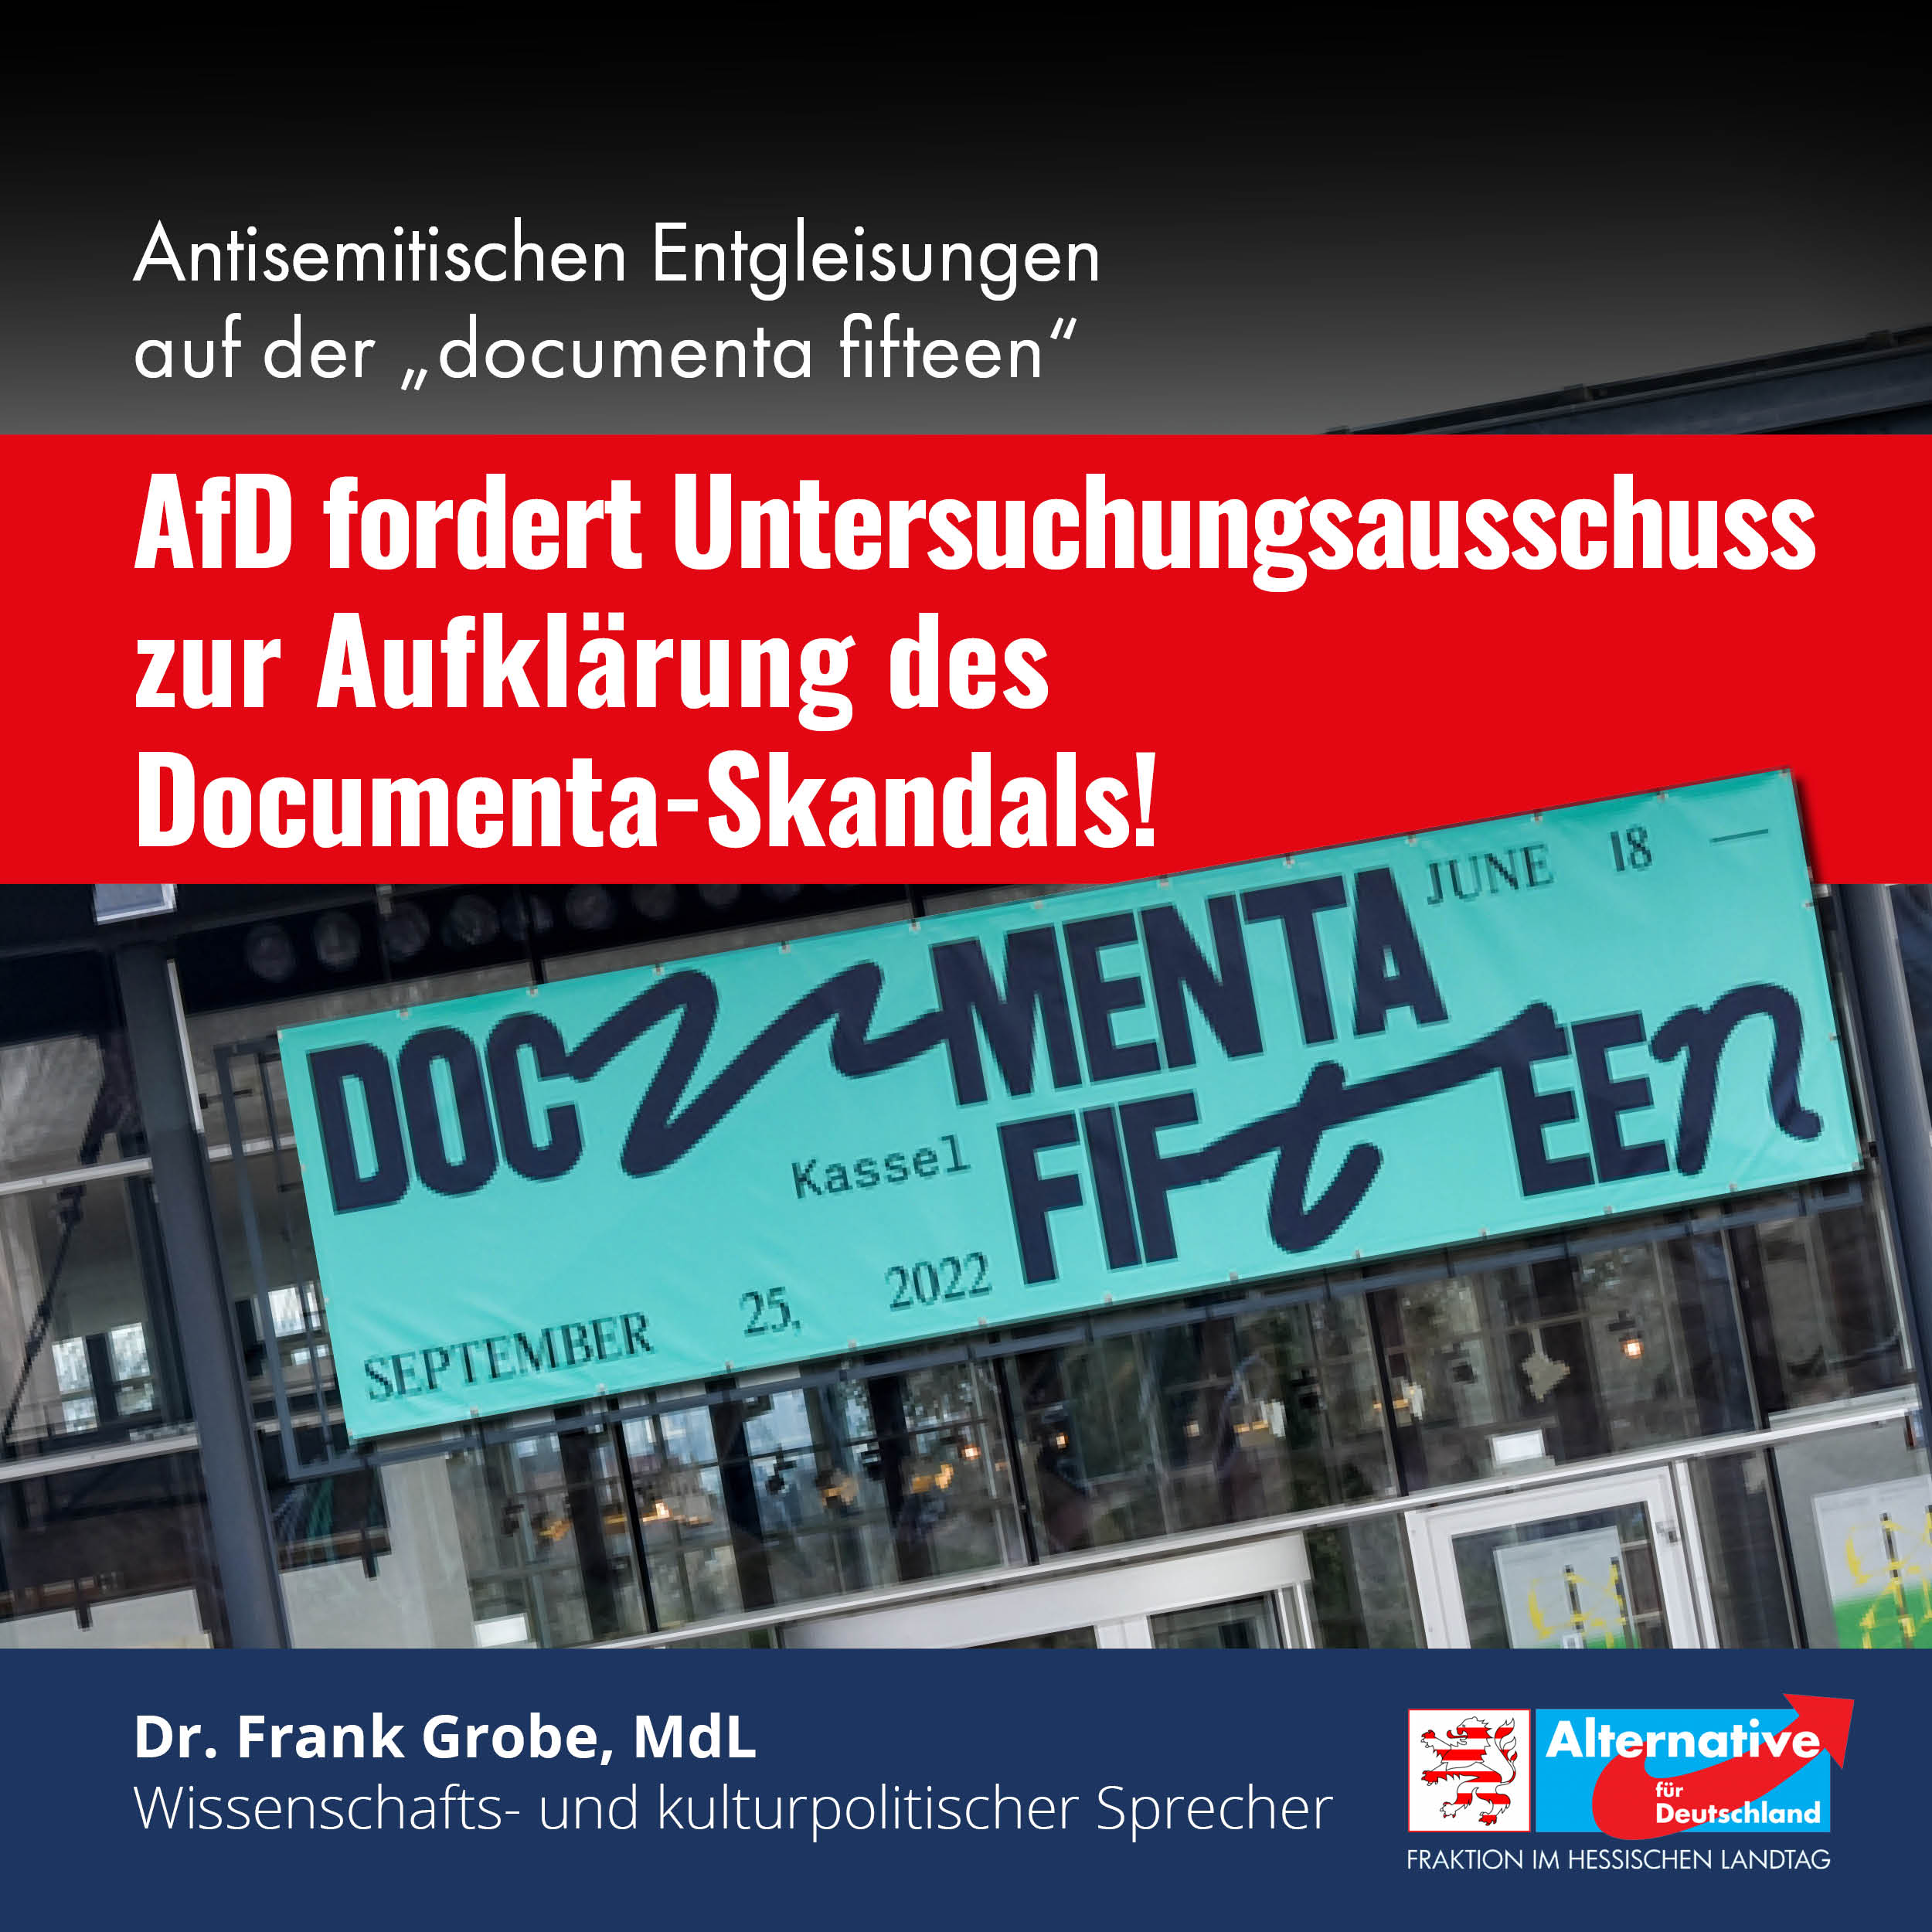 You are currently viewing AfD fordert Untersuchungsausschuss zur Aufklärung des Documenta-Skandals